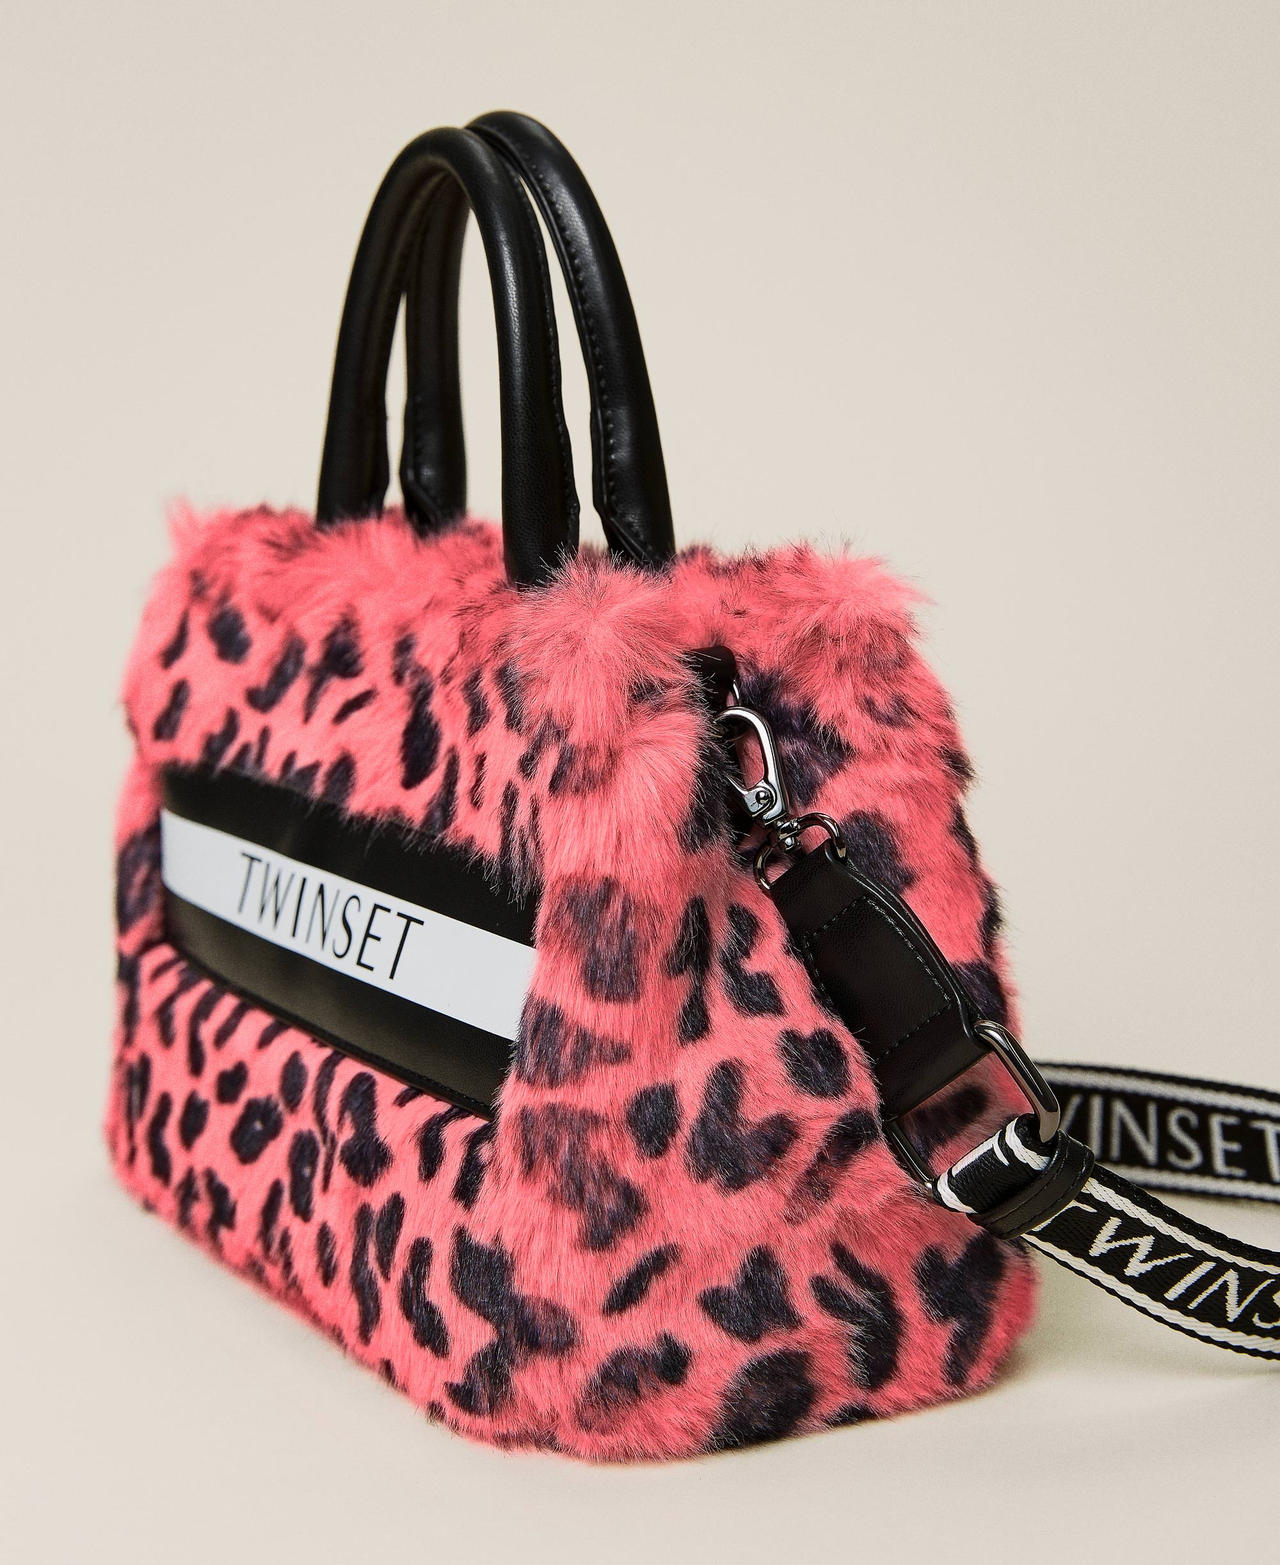 Animal print bag with logo Carmine Rose Leopard Spot Girl 212GJ7943-02